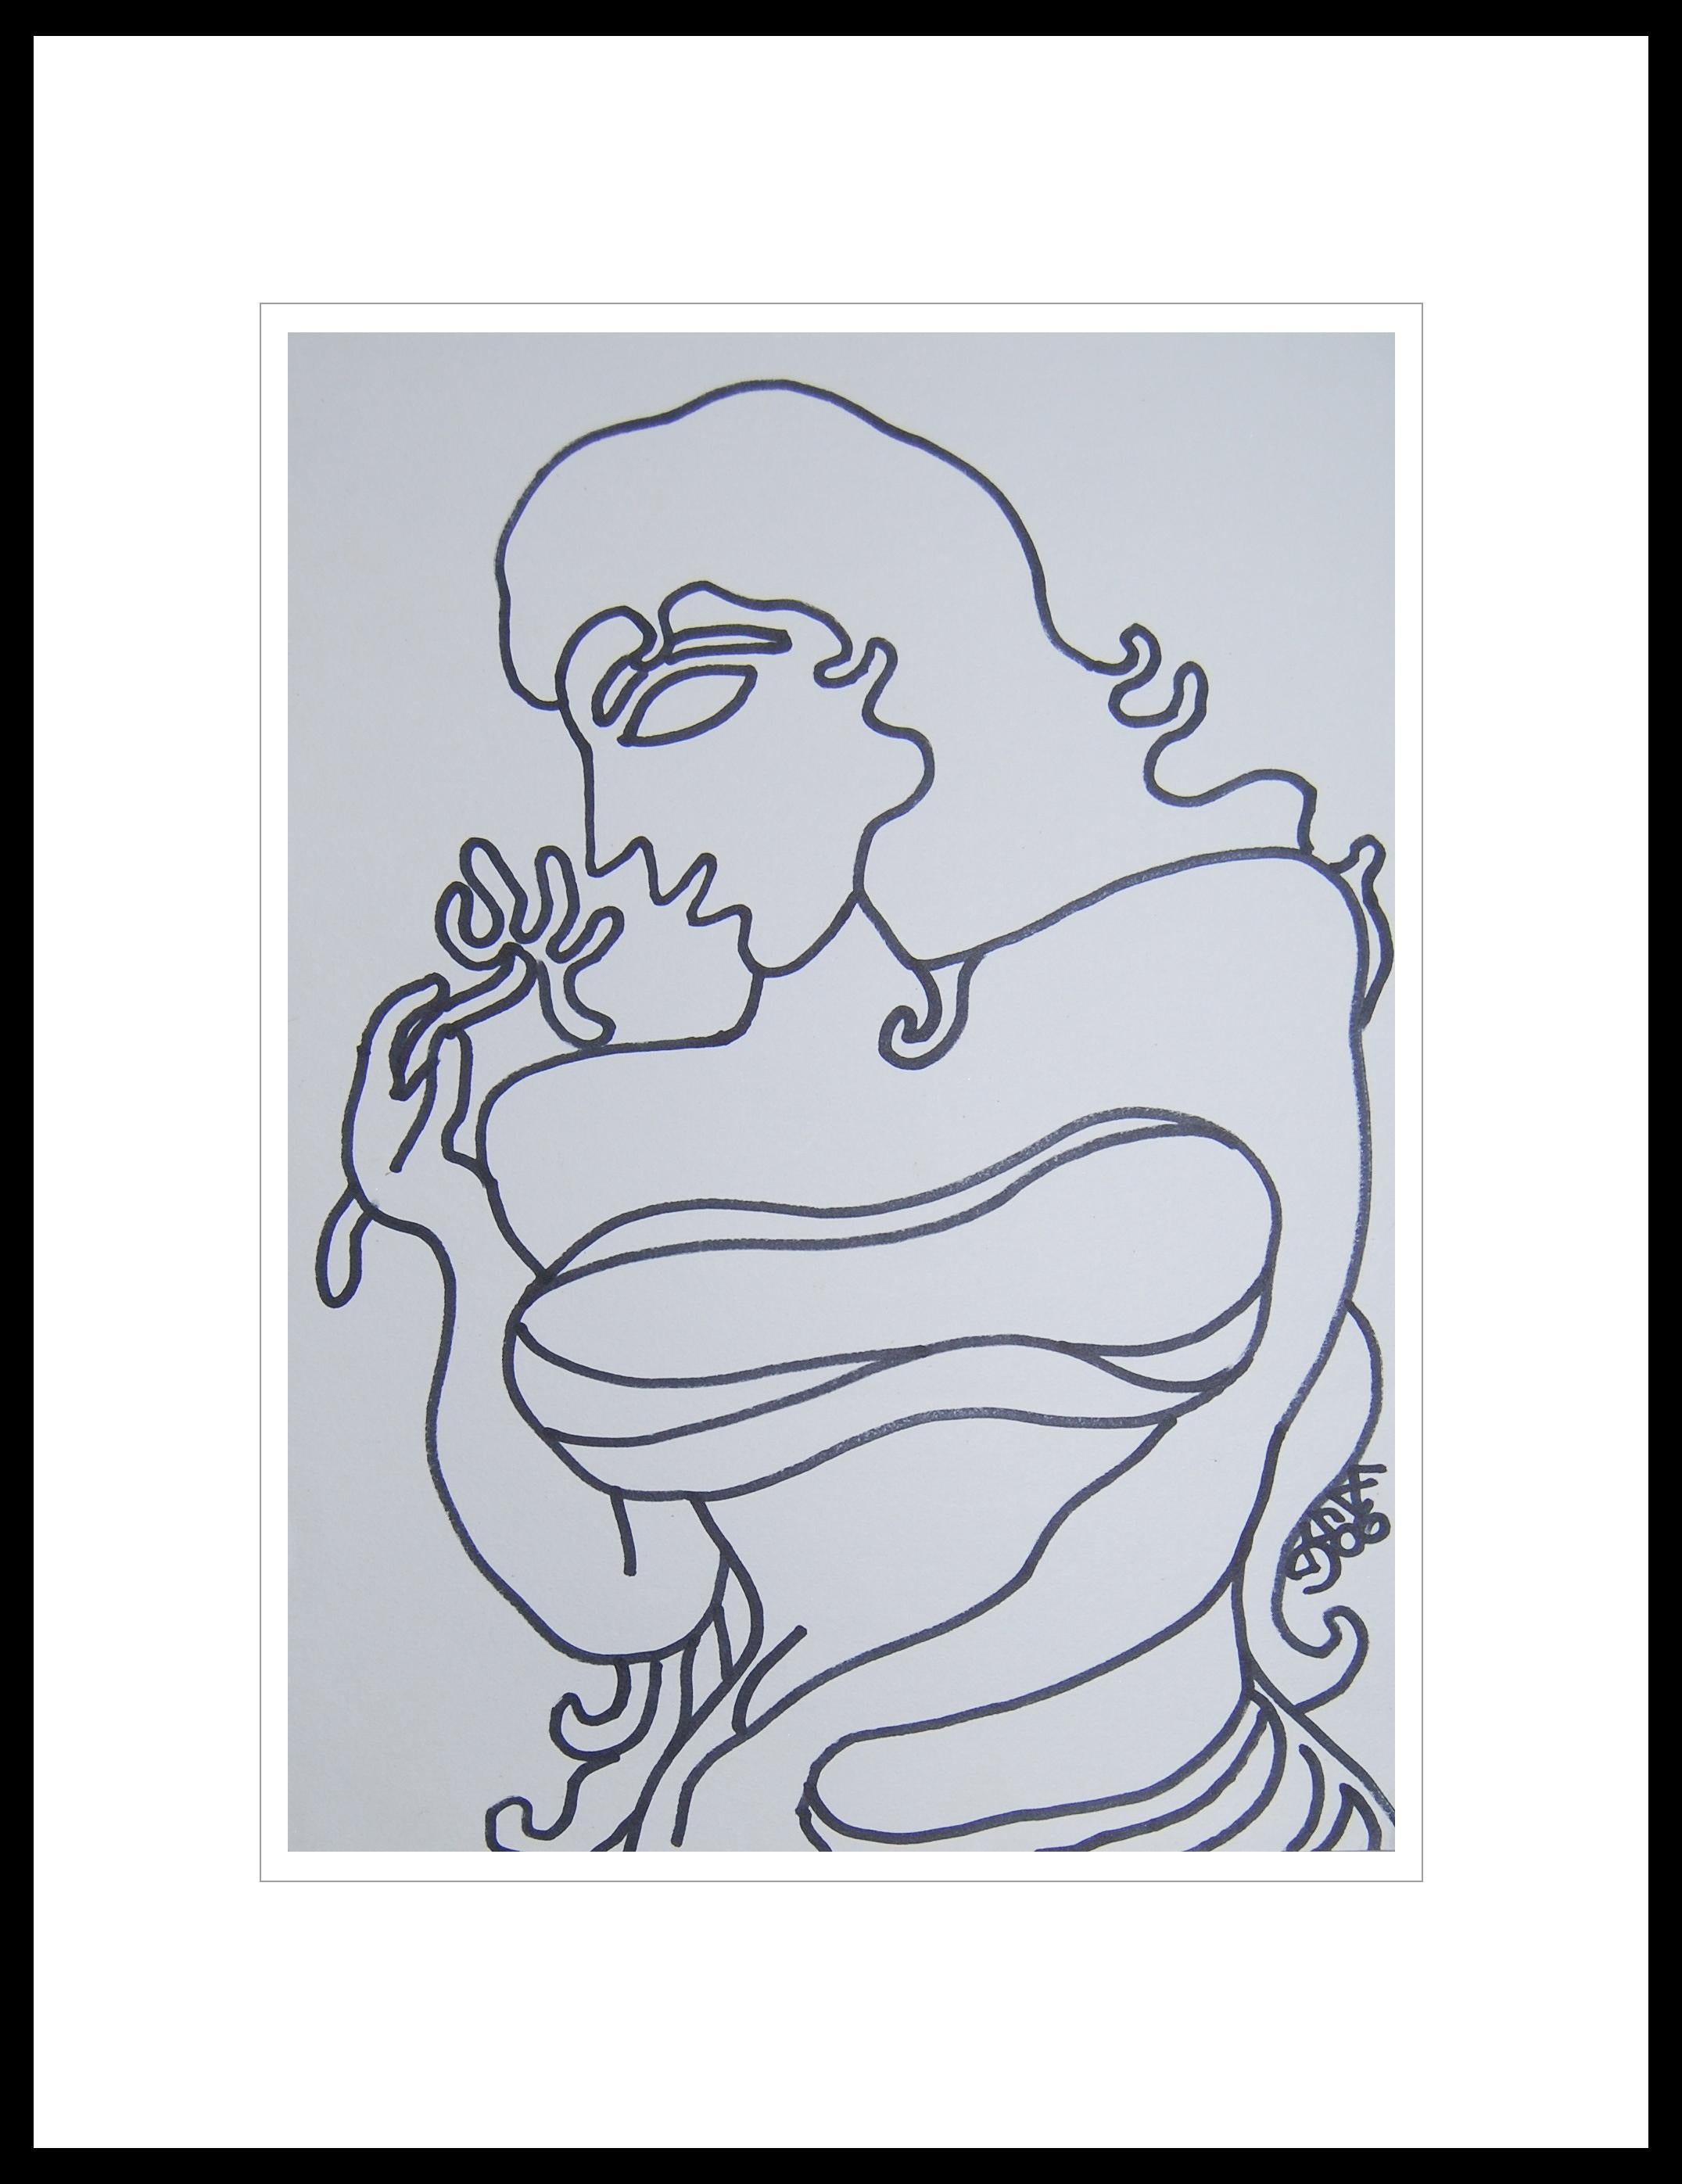 Prakash Karmarkar Figurative Art - Lady with Flower, Fish shaped Eye, Long Hair, Ink on paper, Indian Art"In Stock"